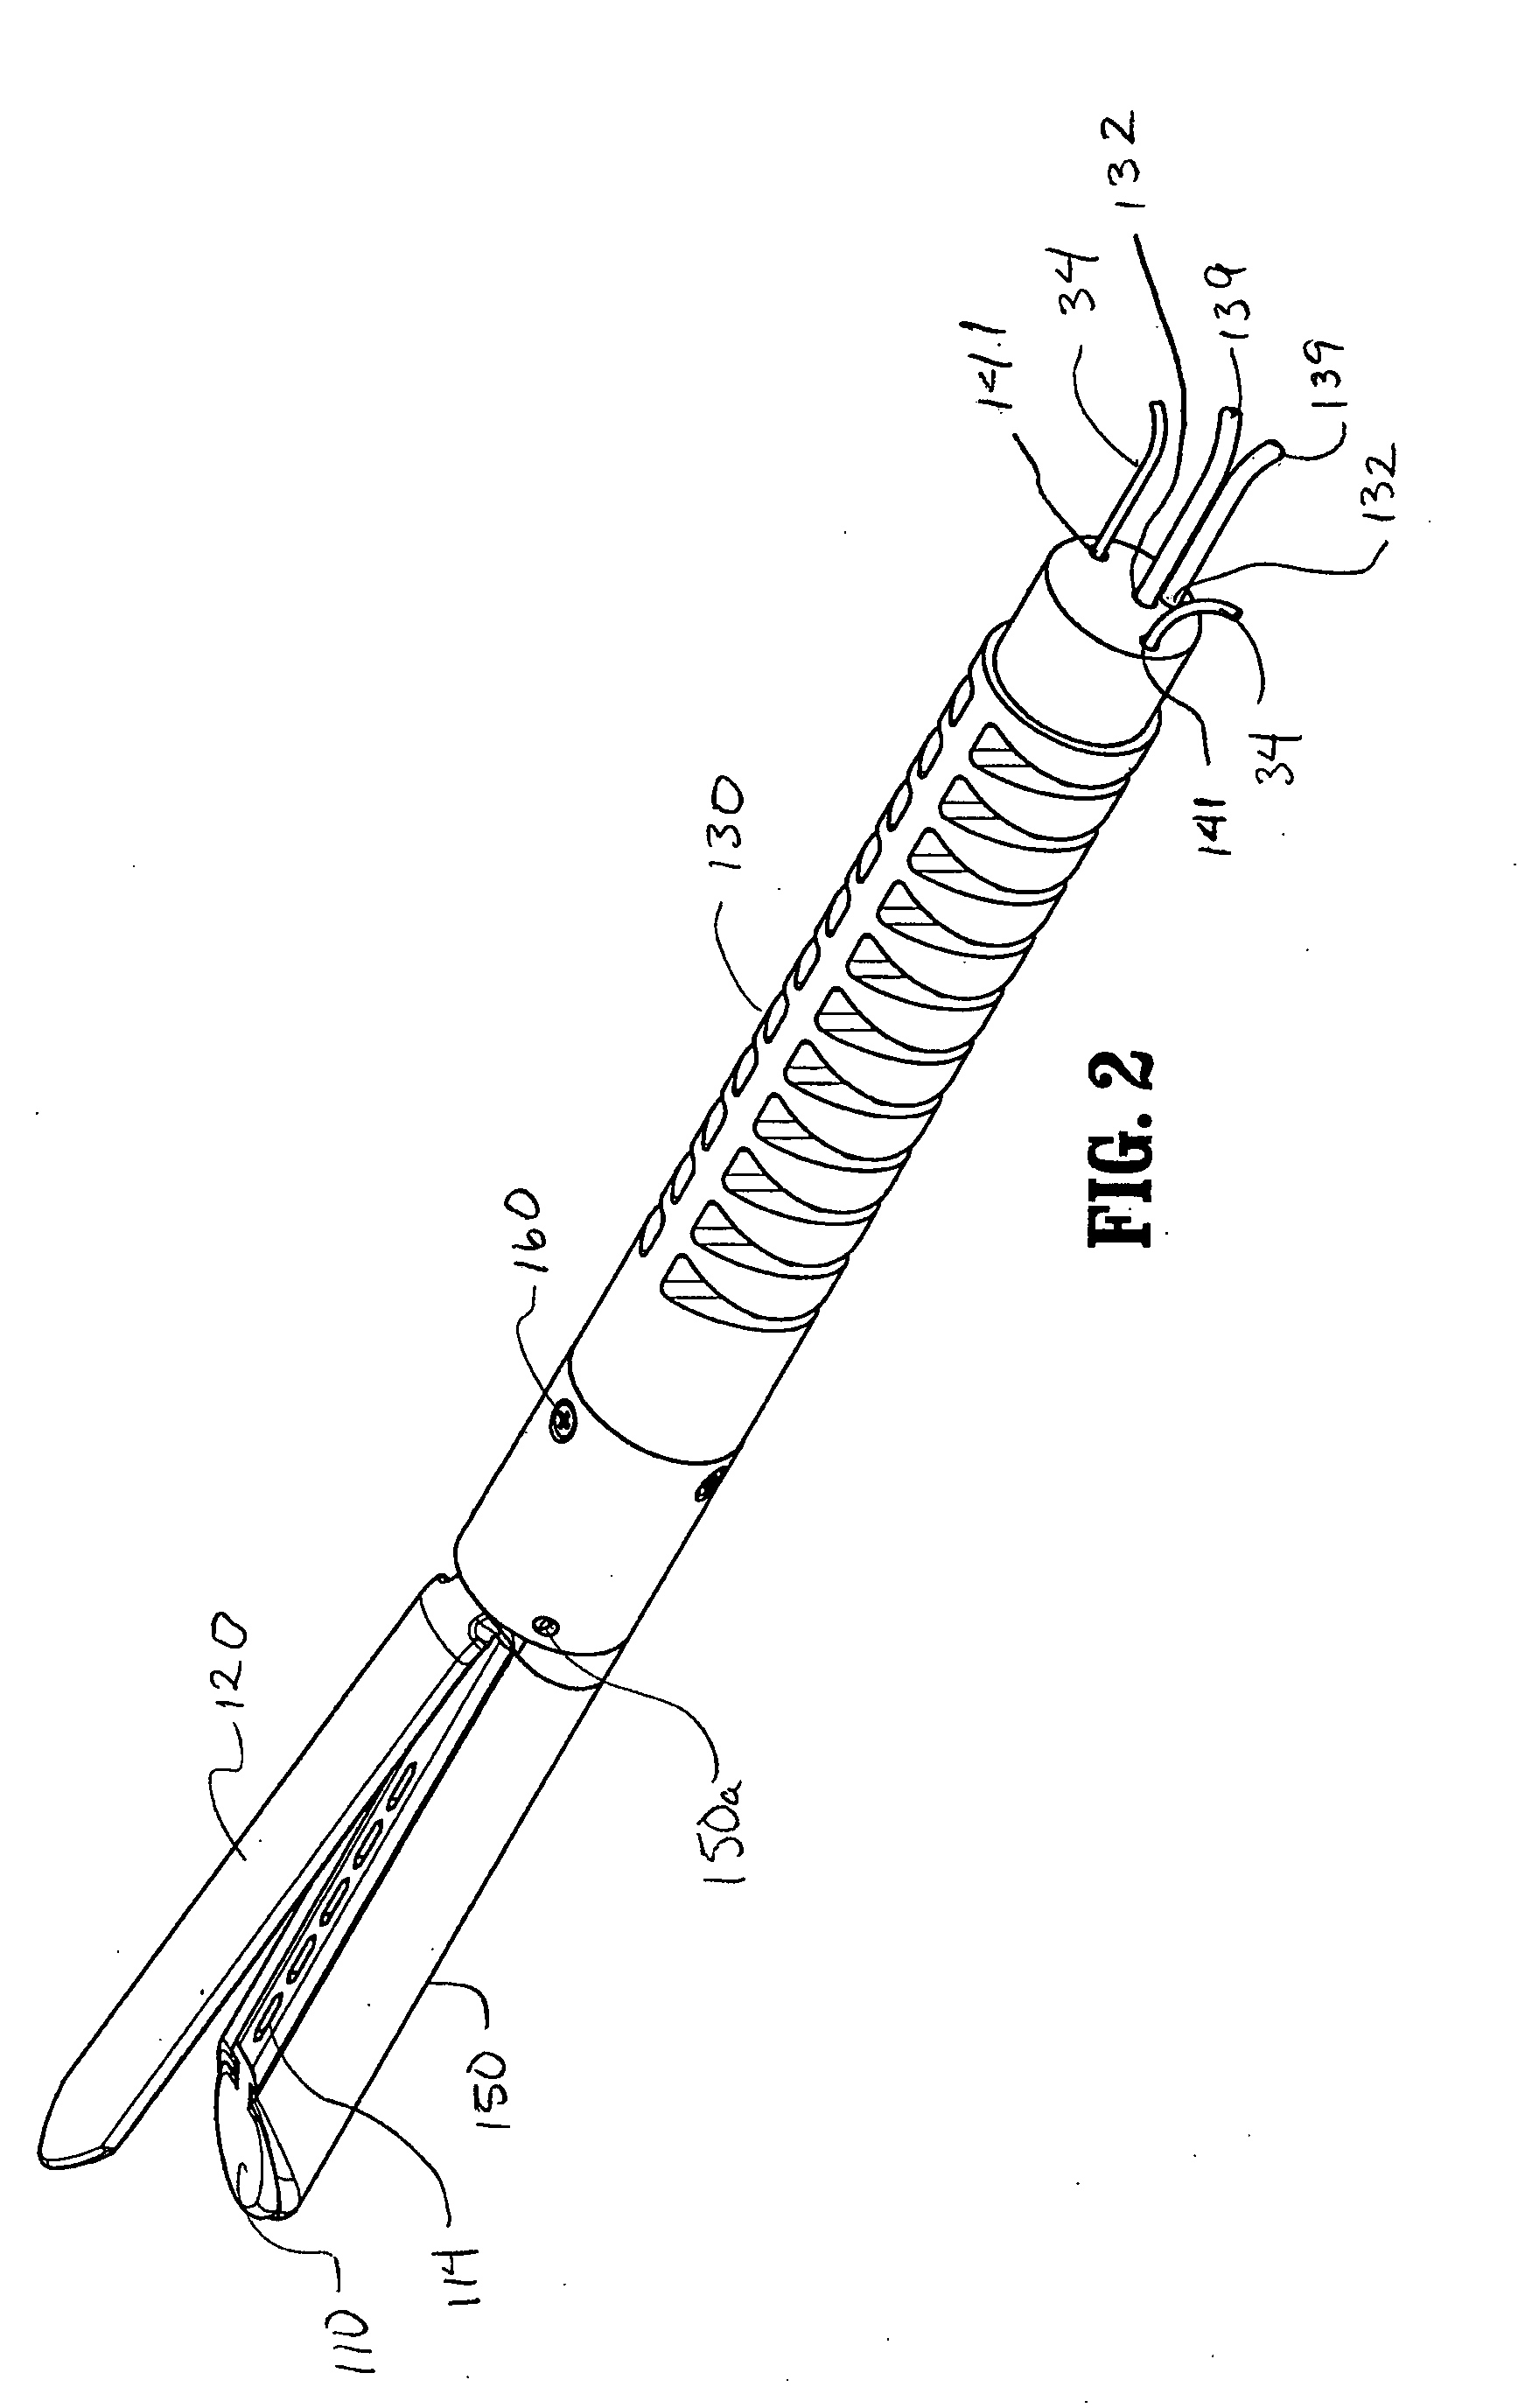 Flexible endoluminal surgical instrument